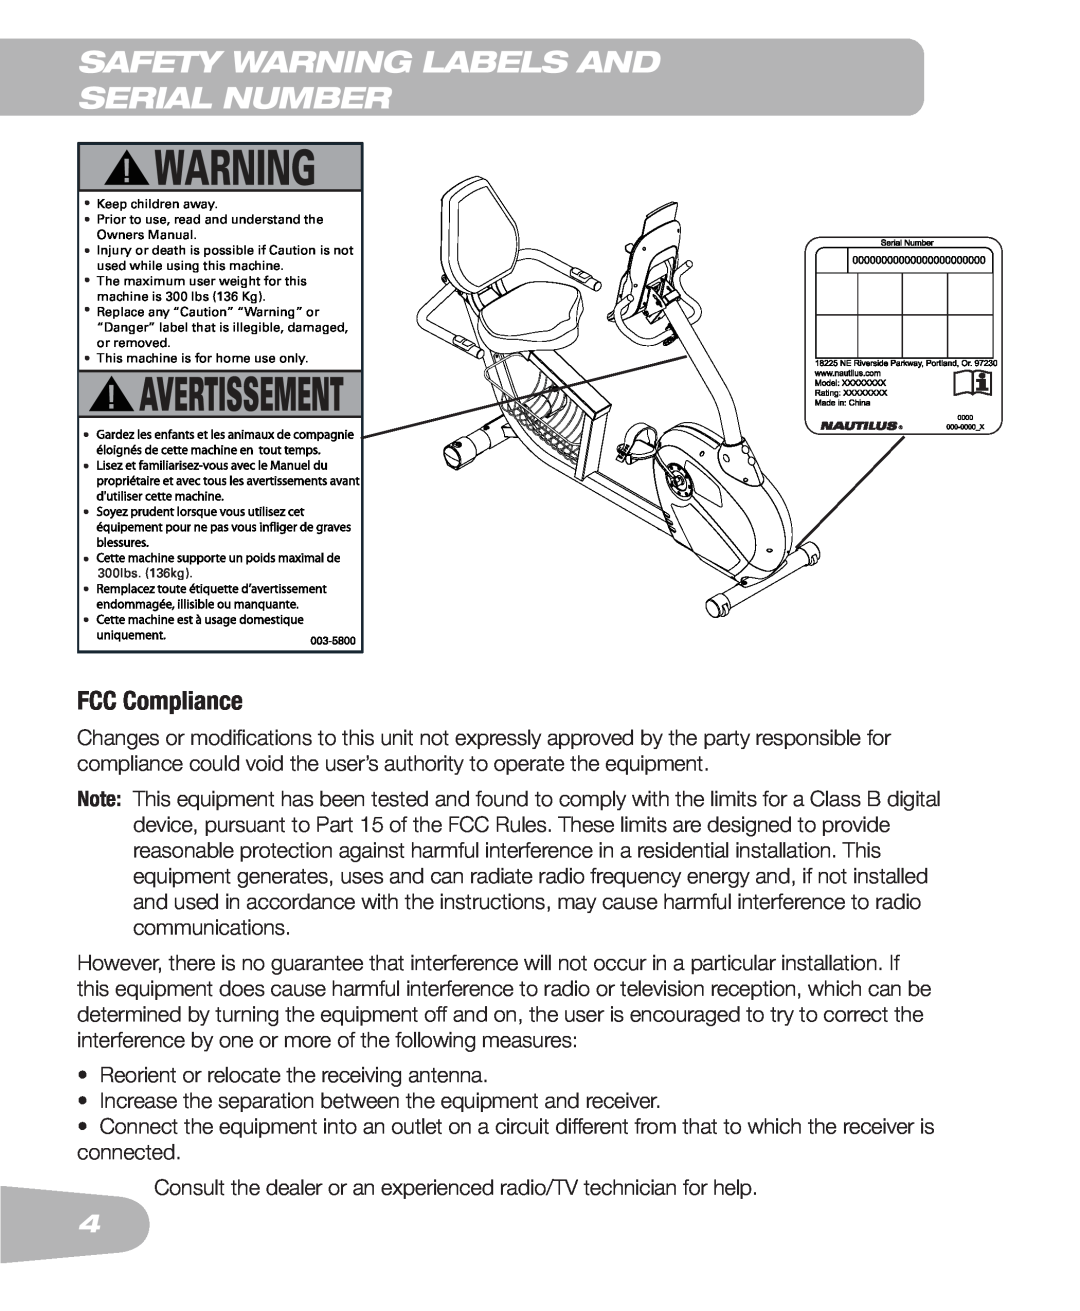 Schwinn 250 schwinn manual Safety Warning Labels and Serial Number, FCC Compliance 